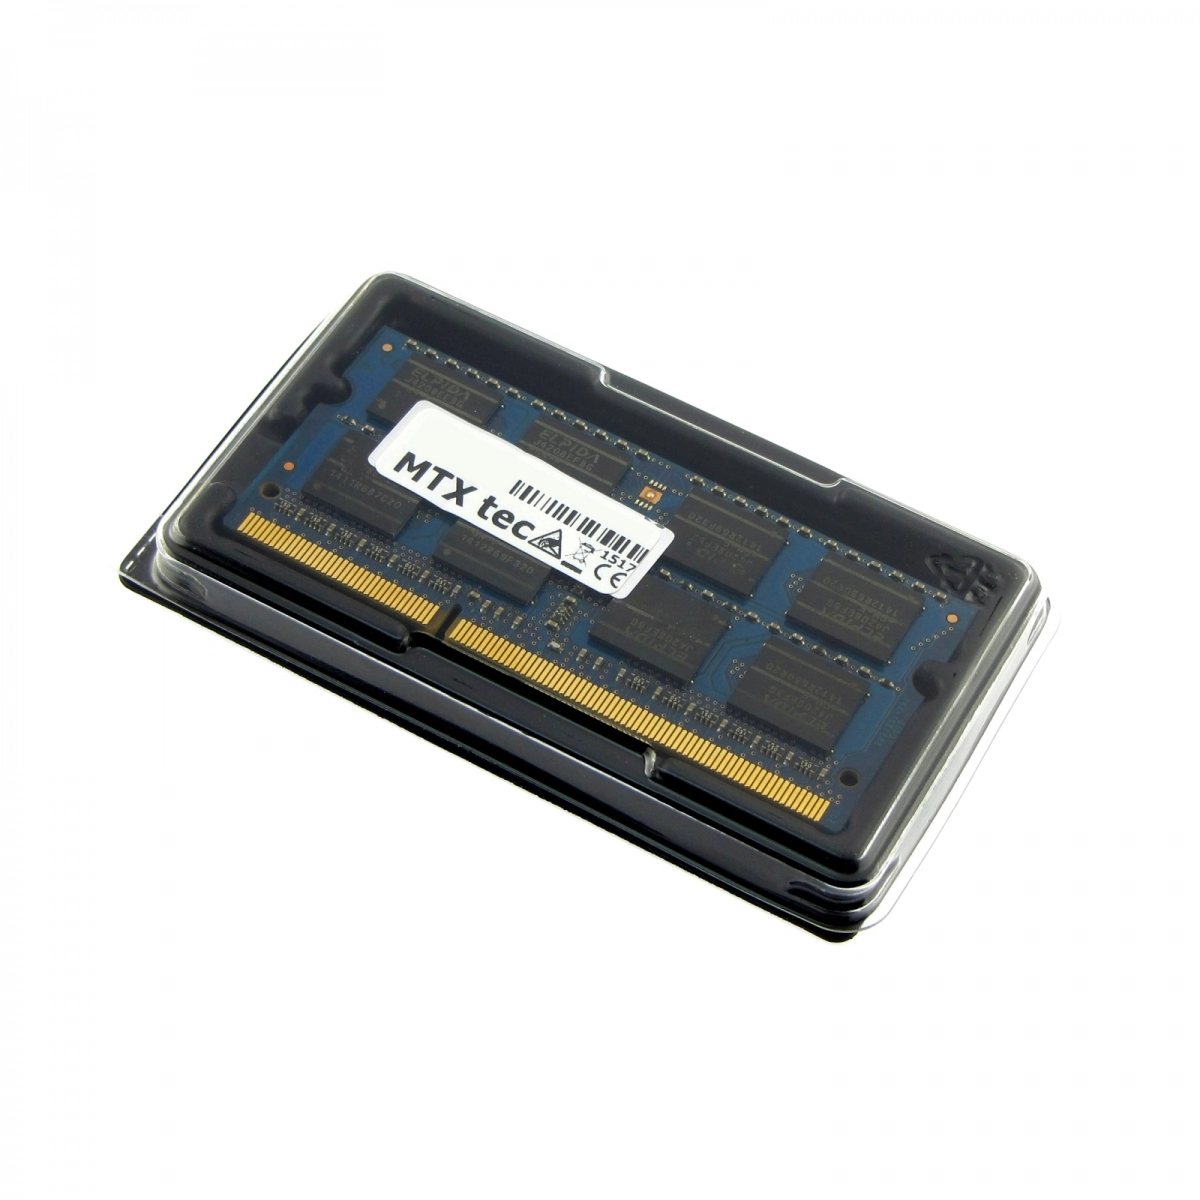 MTXtec Arbeitsspeicher 8 GB RAM für LENOVO ThinkPad Edge E540 (20C6)